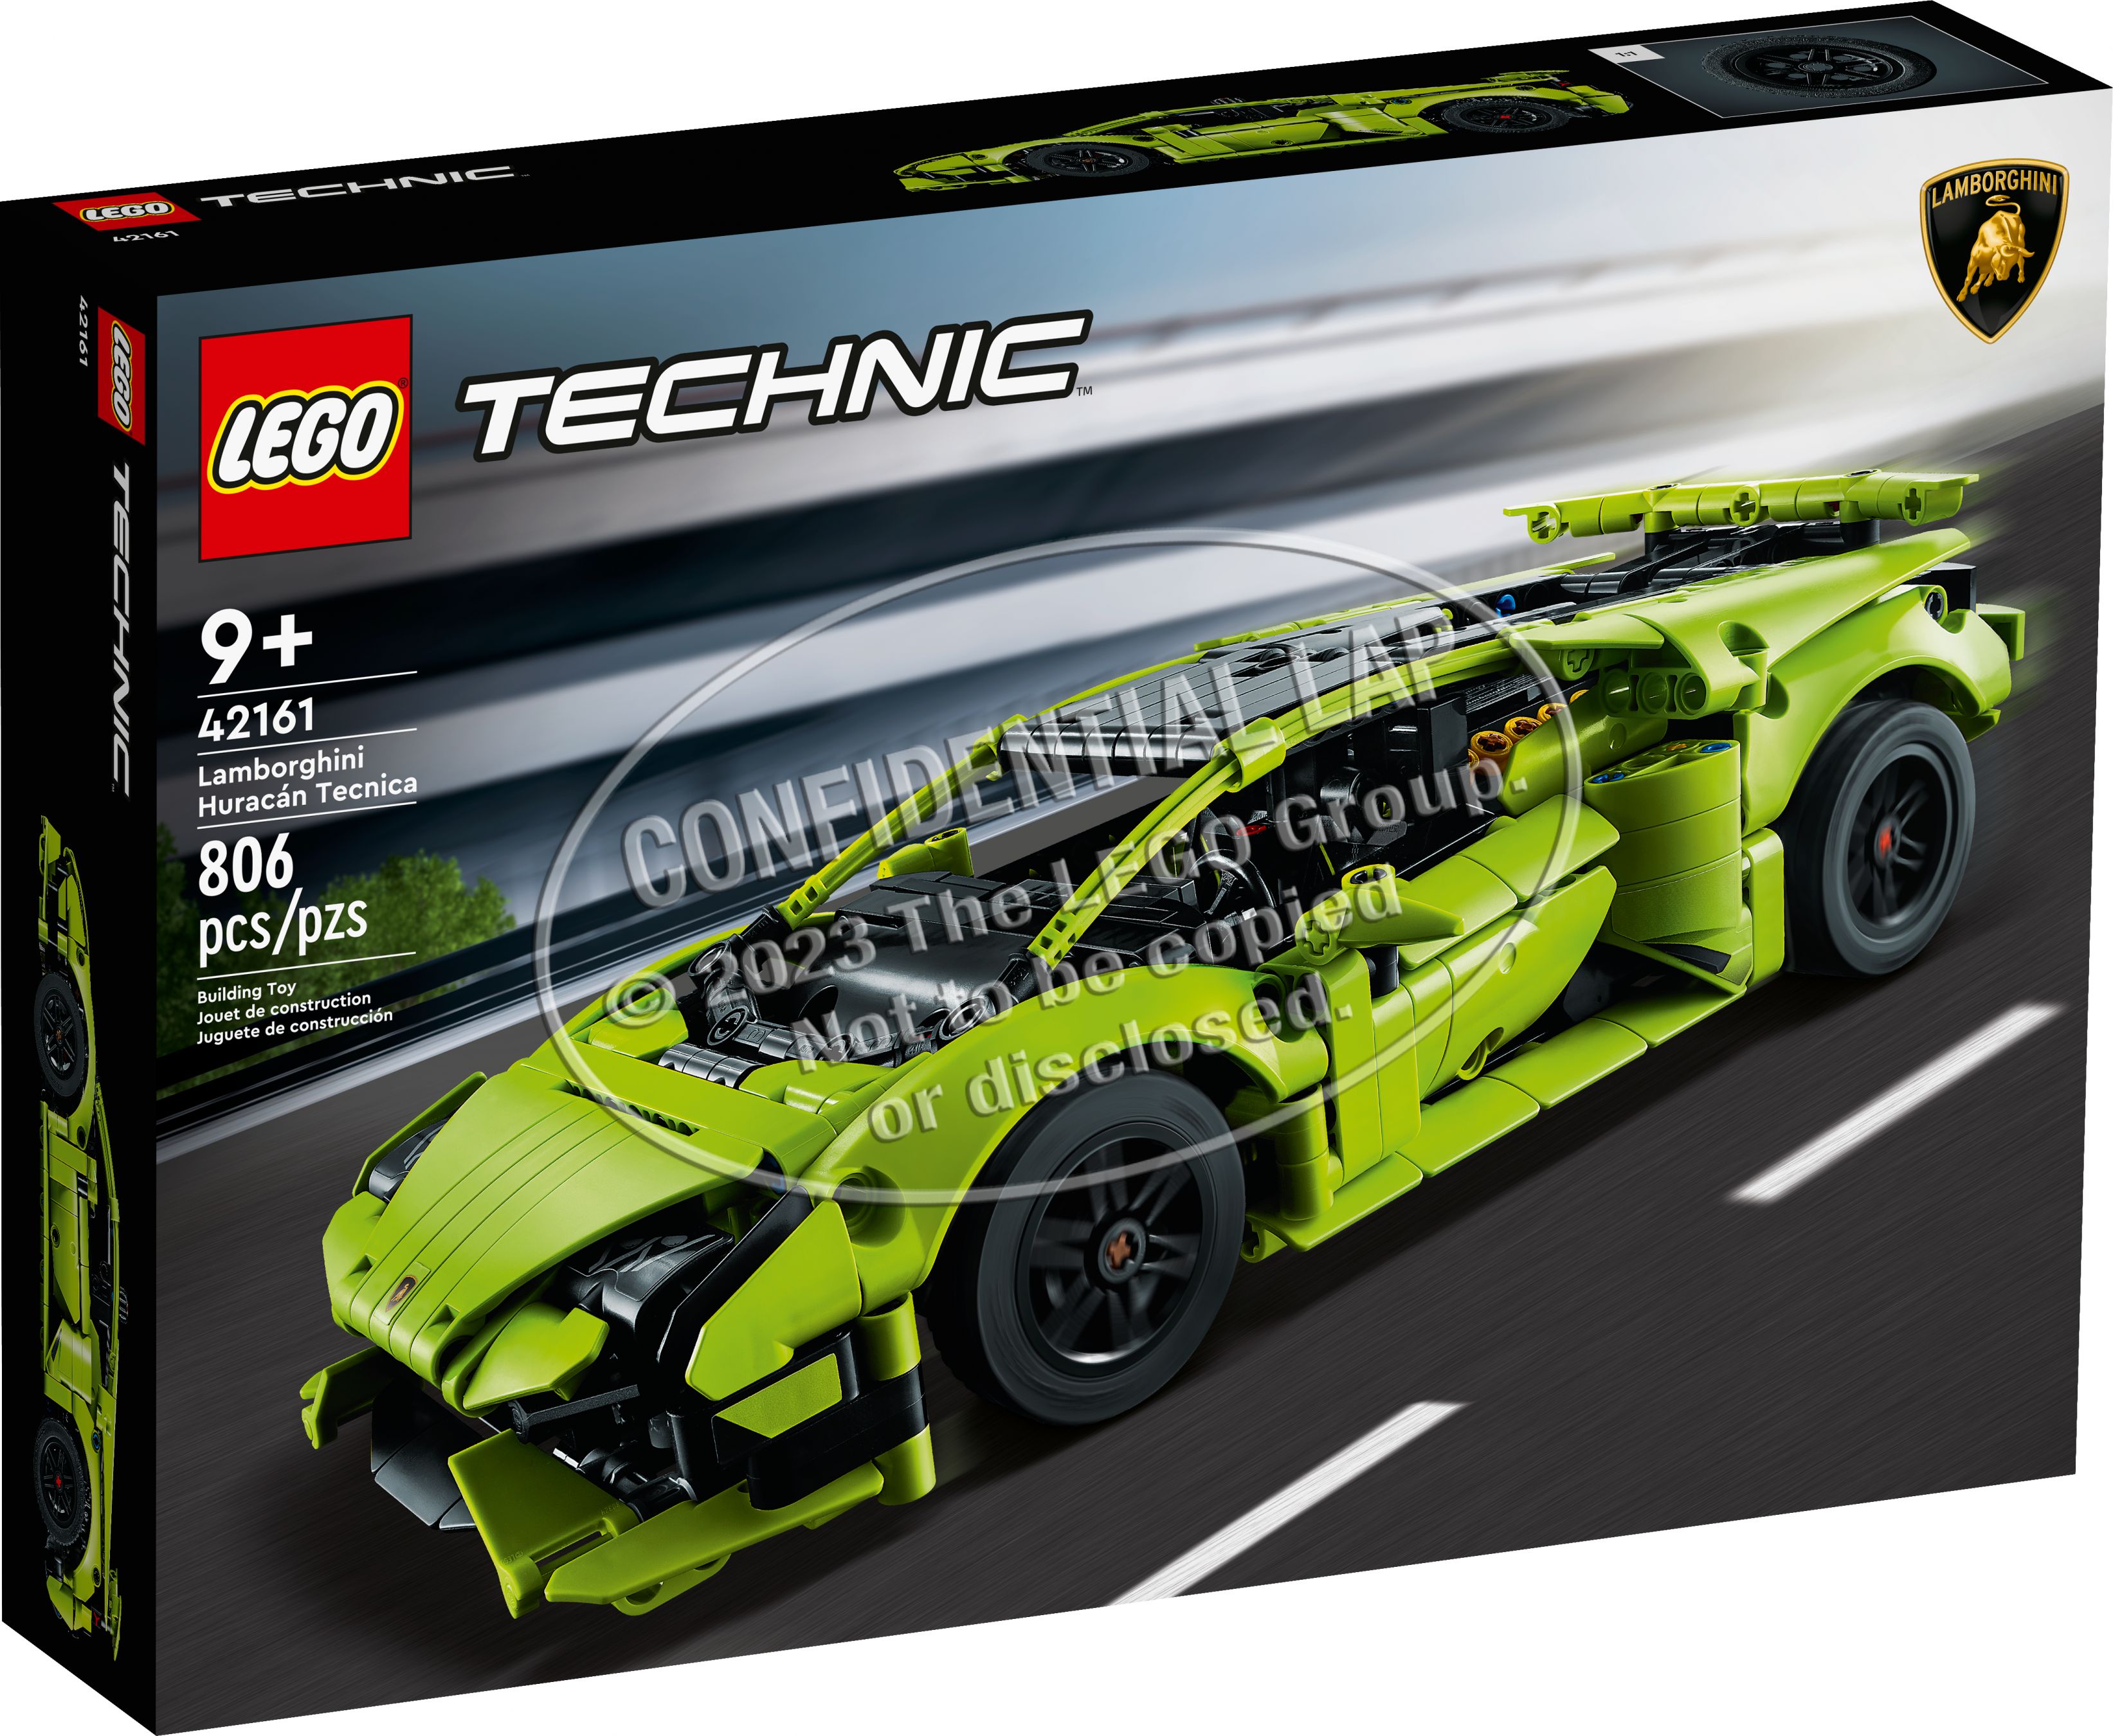 LEGO Technic 42161 Lamborghini Huracán Tecnica LEGO_42161_Box1_v39.jpg